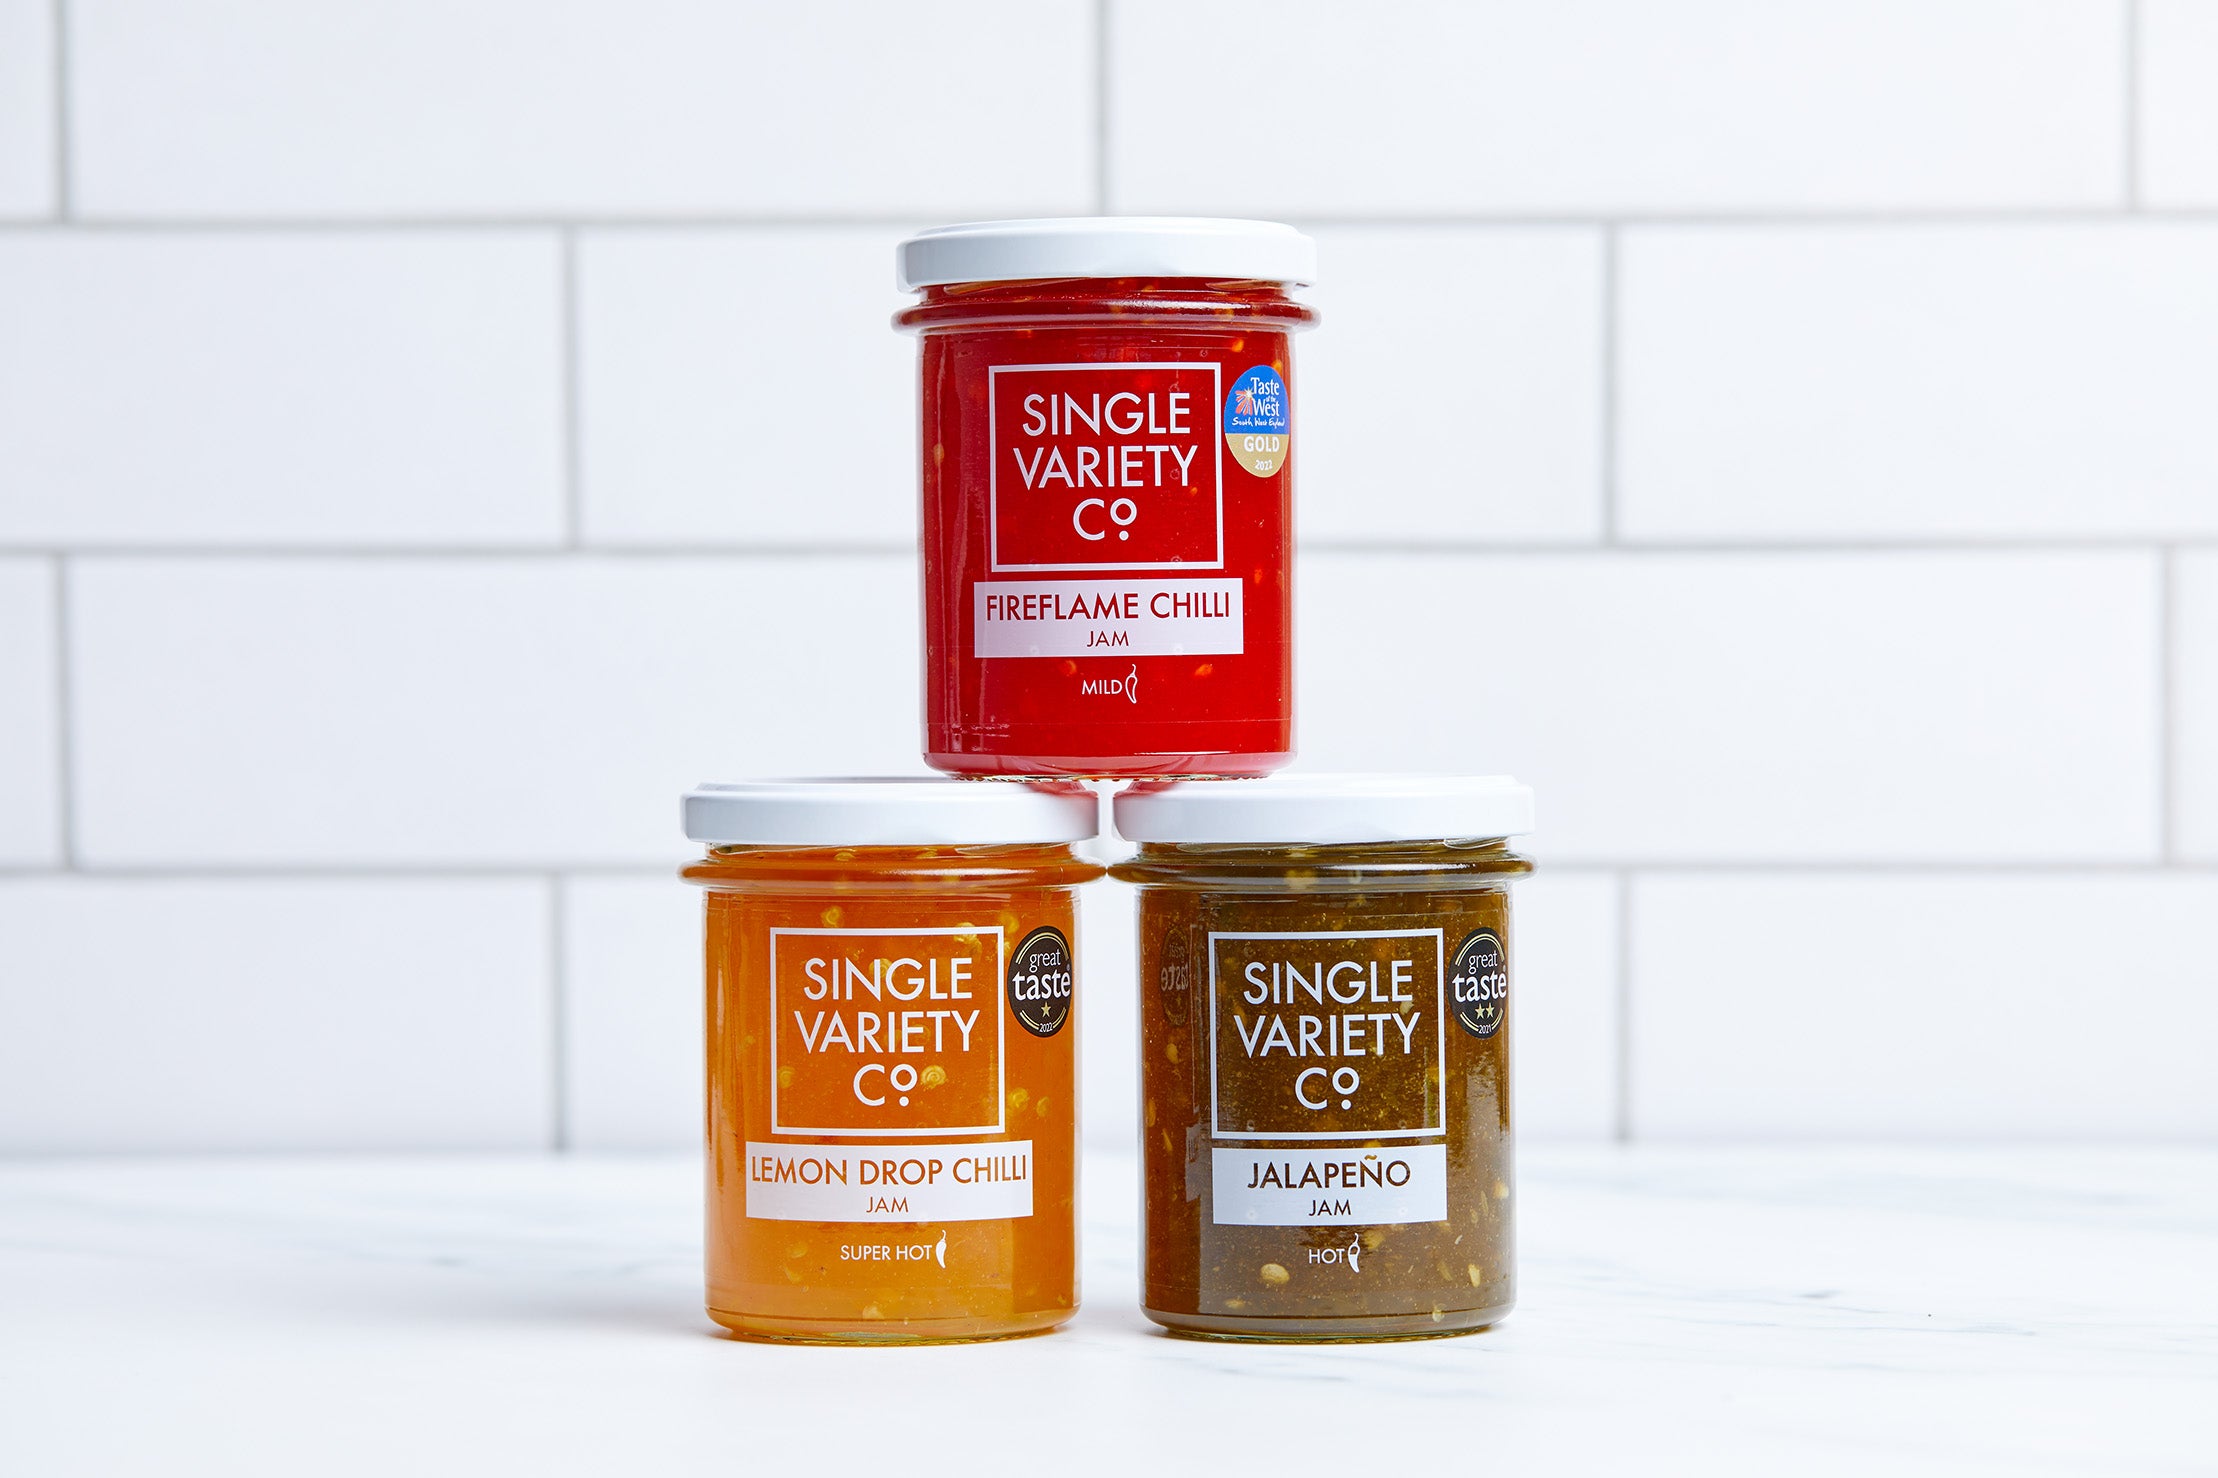 Single variety chilli jams- our varieties - Single Variety Co